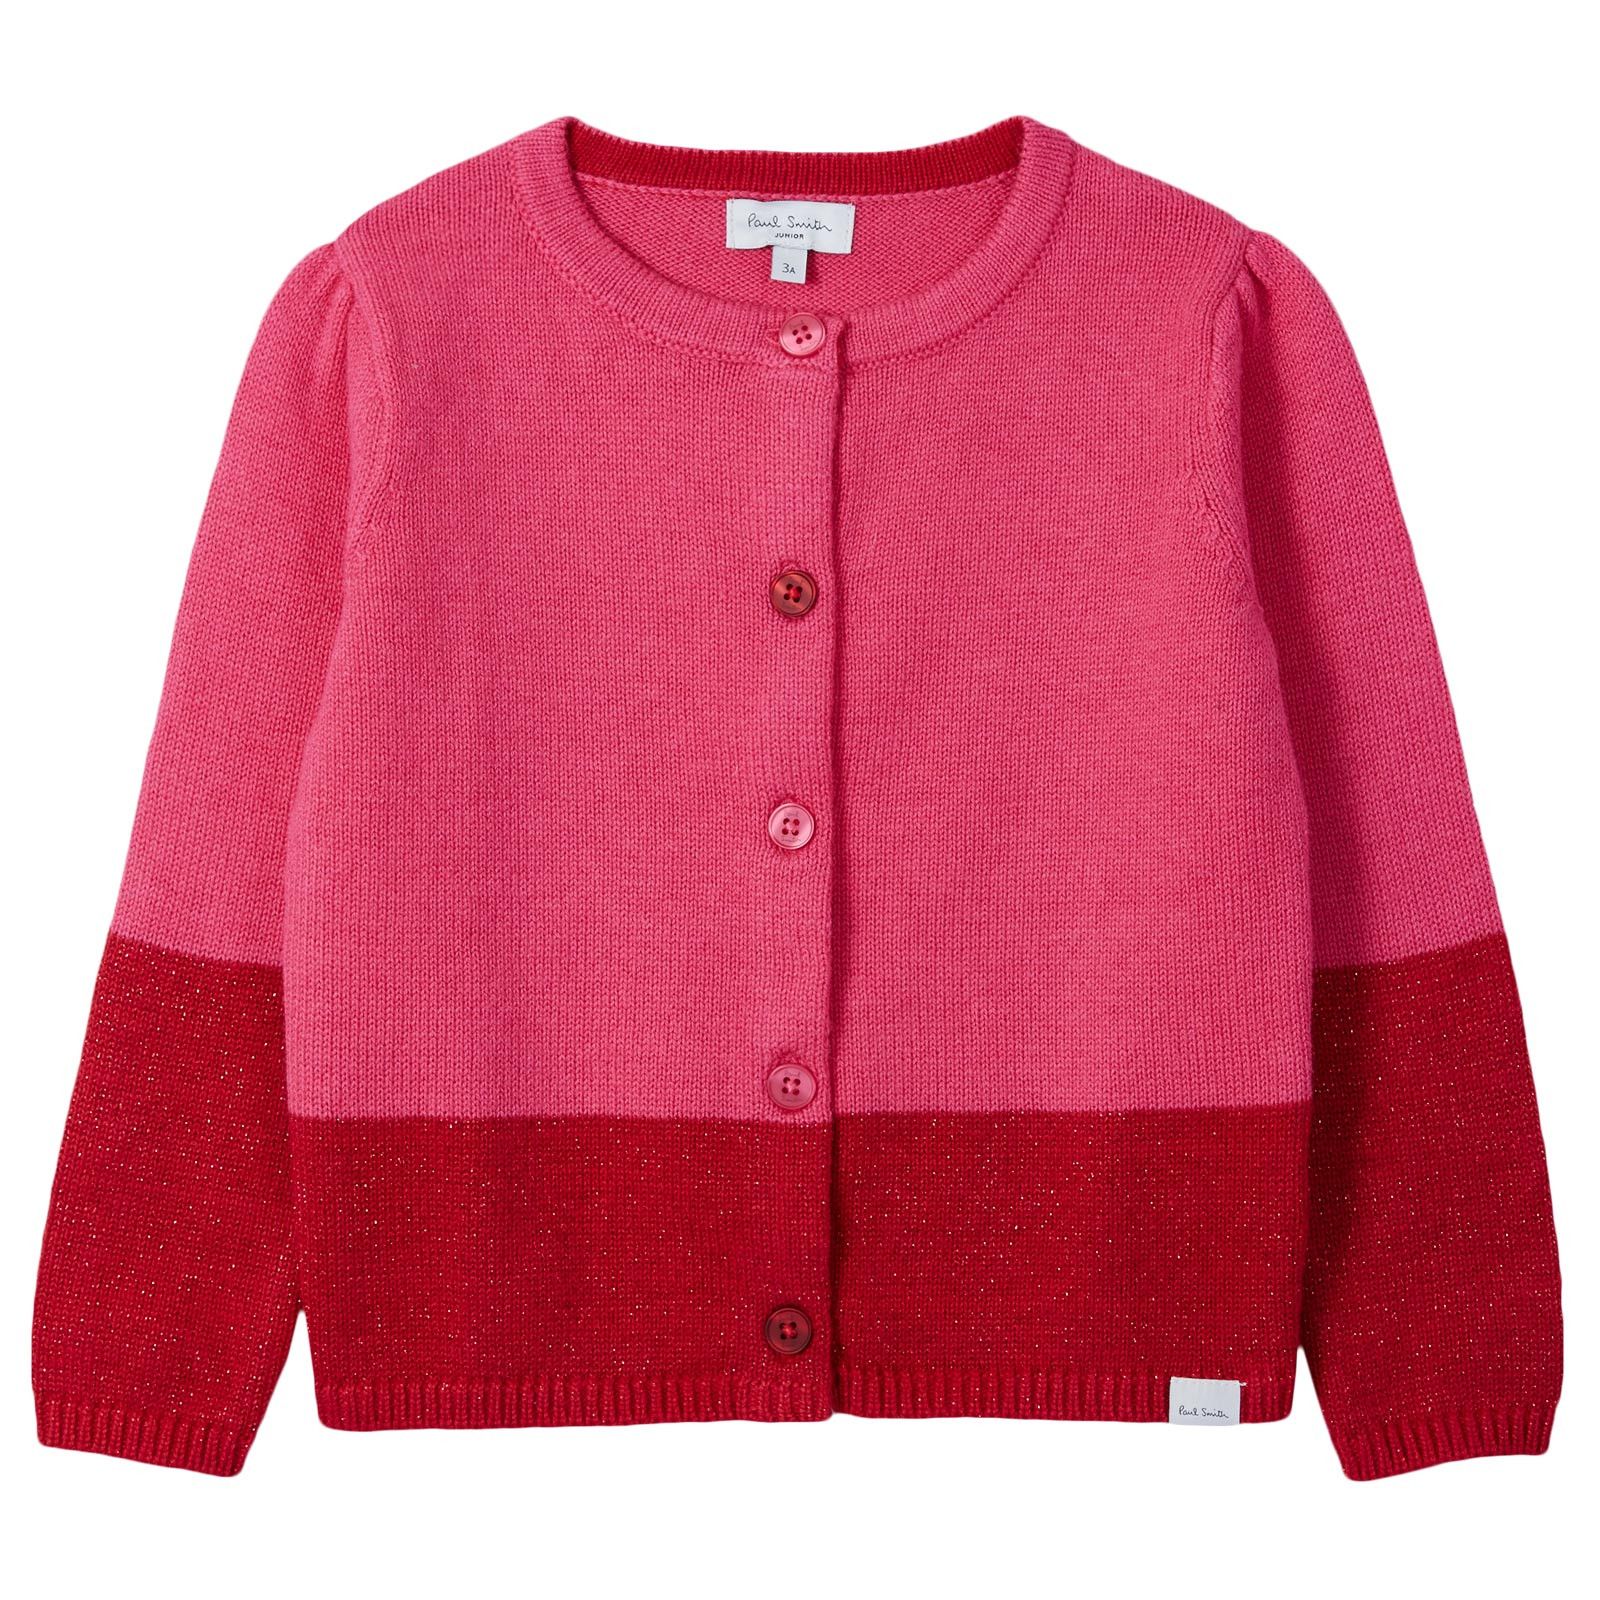 Girls Confetti Pink&Fuchsia Knitted Cardigan - CÉMAROSE | Children's Fashion Store - 1